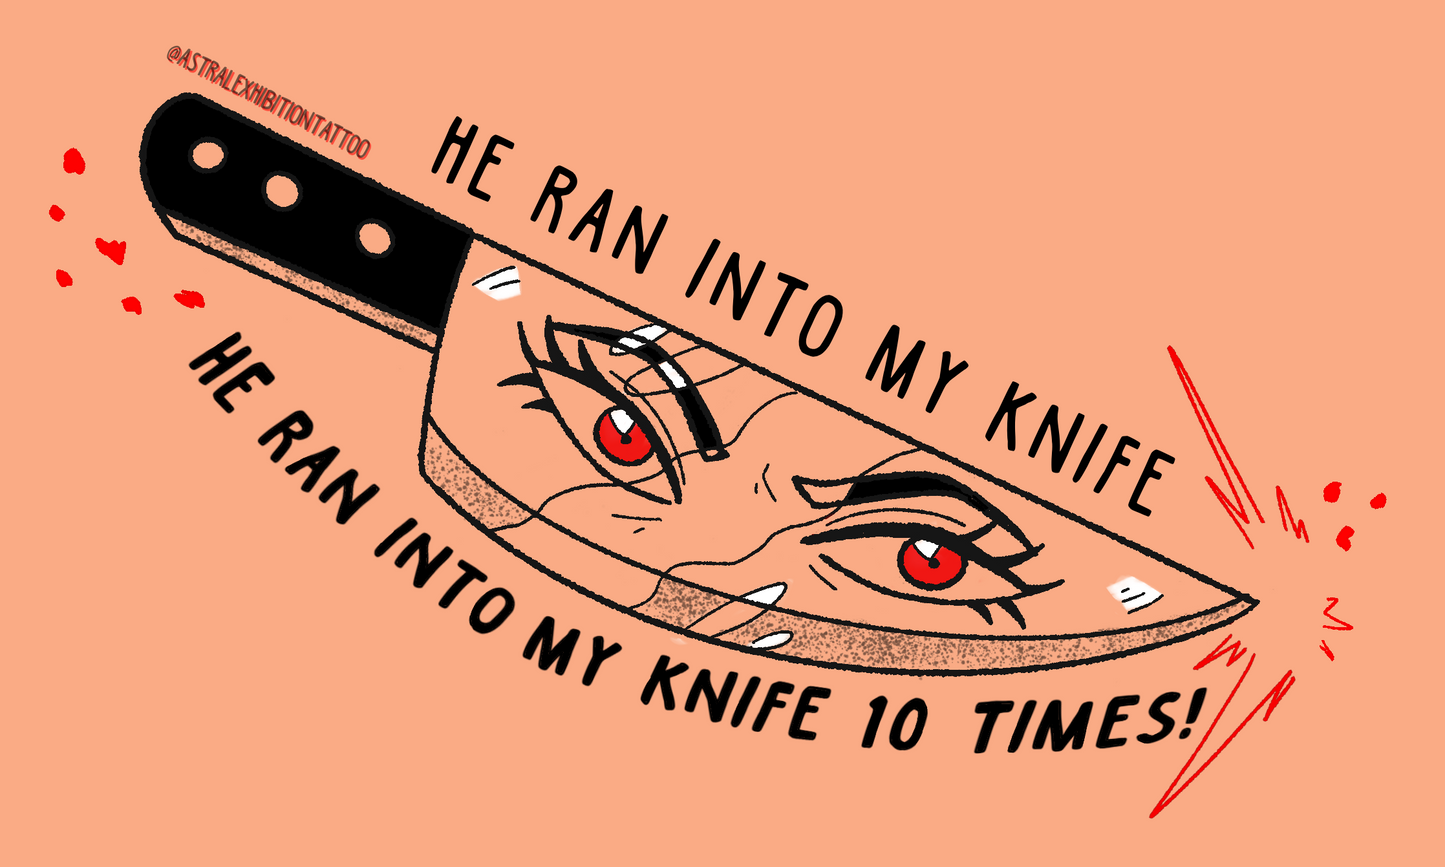 He Ran Into My Knife